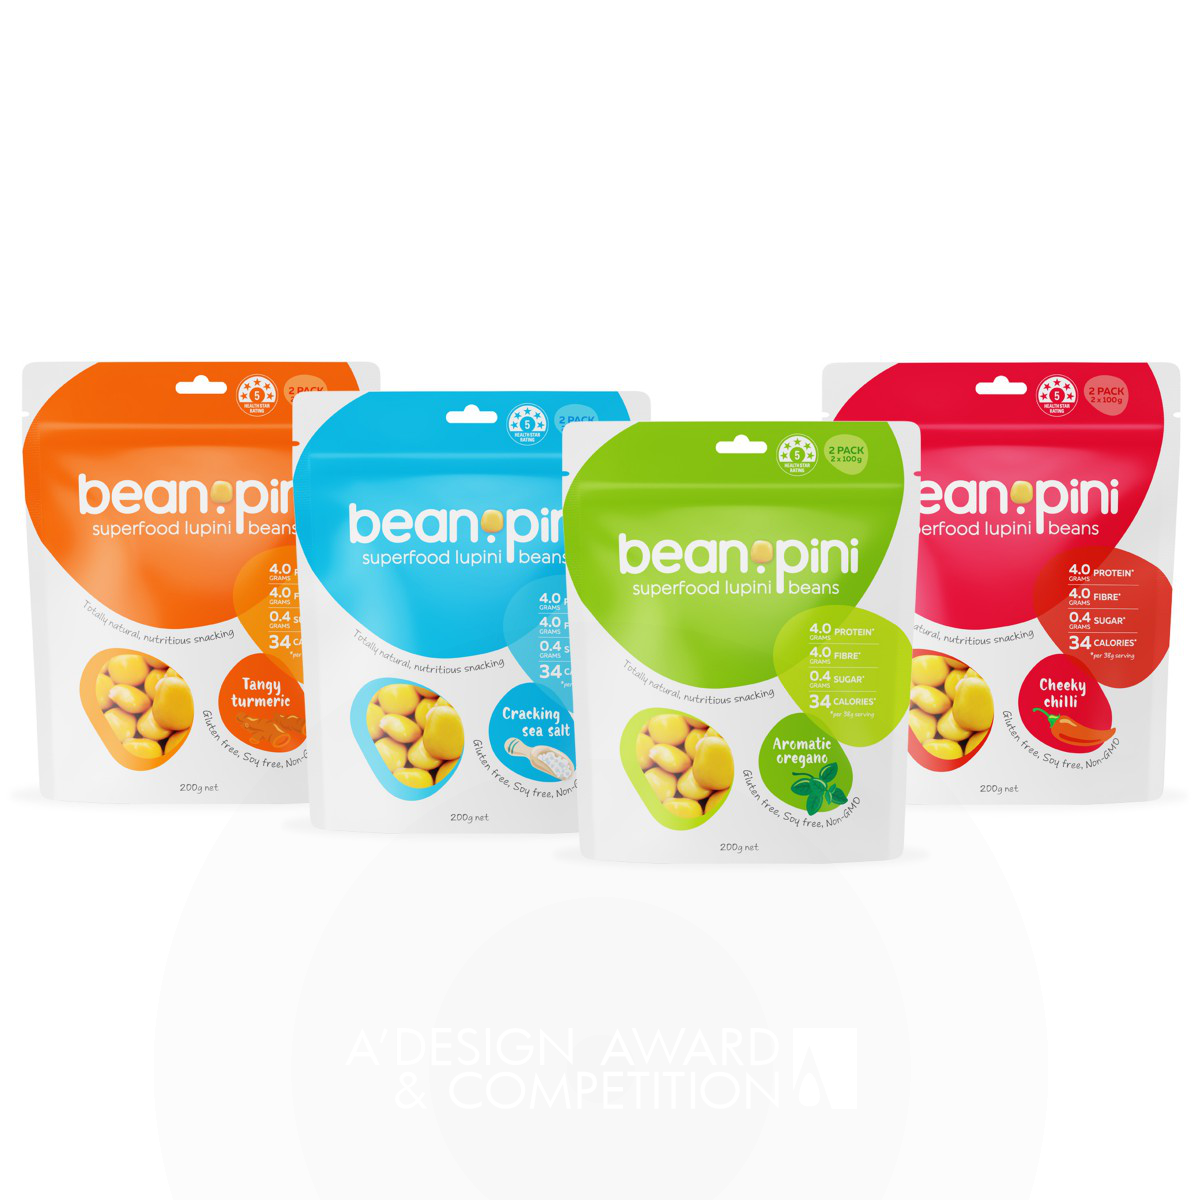 Beanopini Food by Angela Spindler Iron Packaging Design Award Winner 2018 